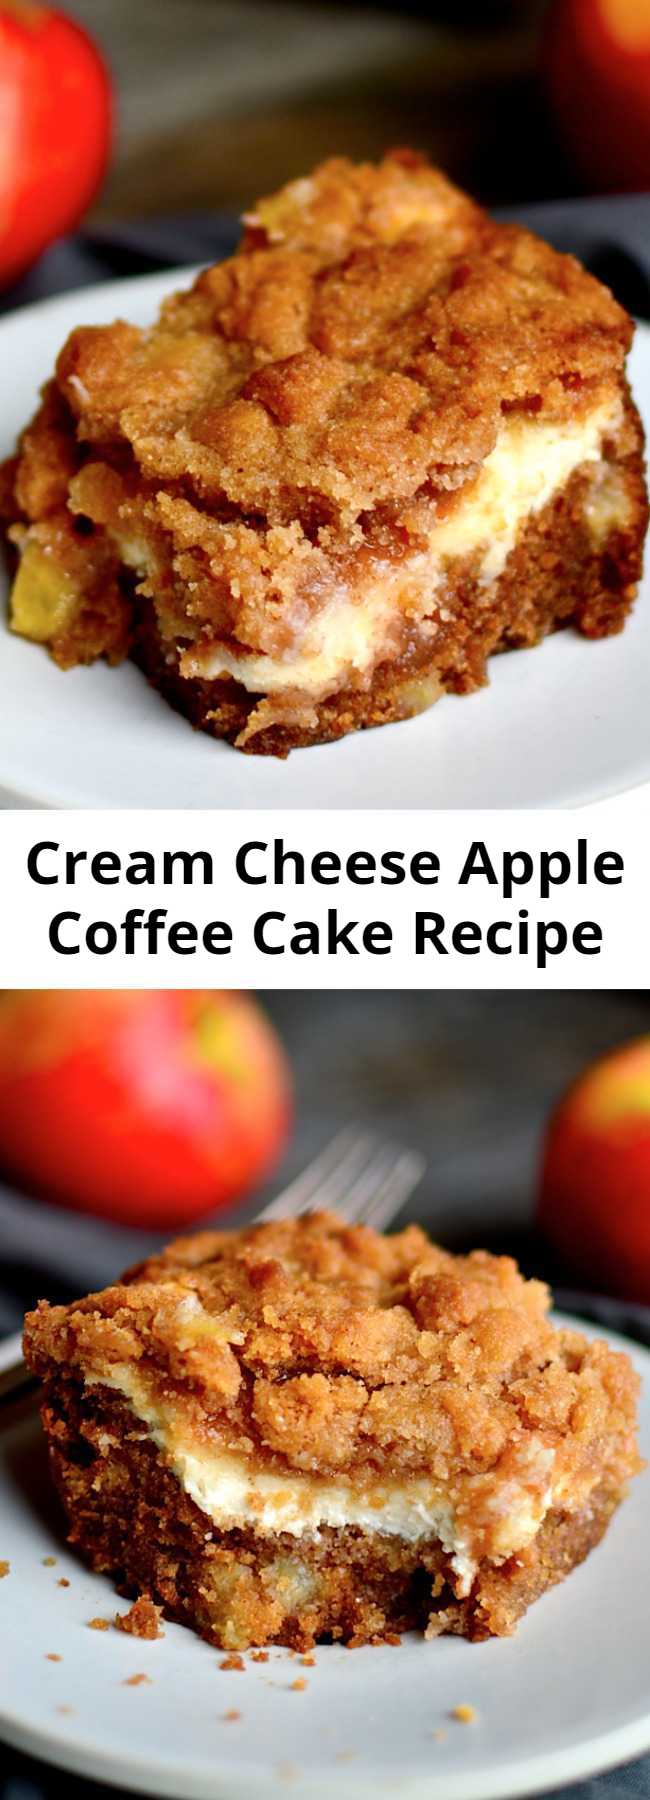 Cream Cheese Apple Coffee Cake Recipe - What a beautiful dessert. I love using the apples of the season.